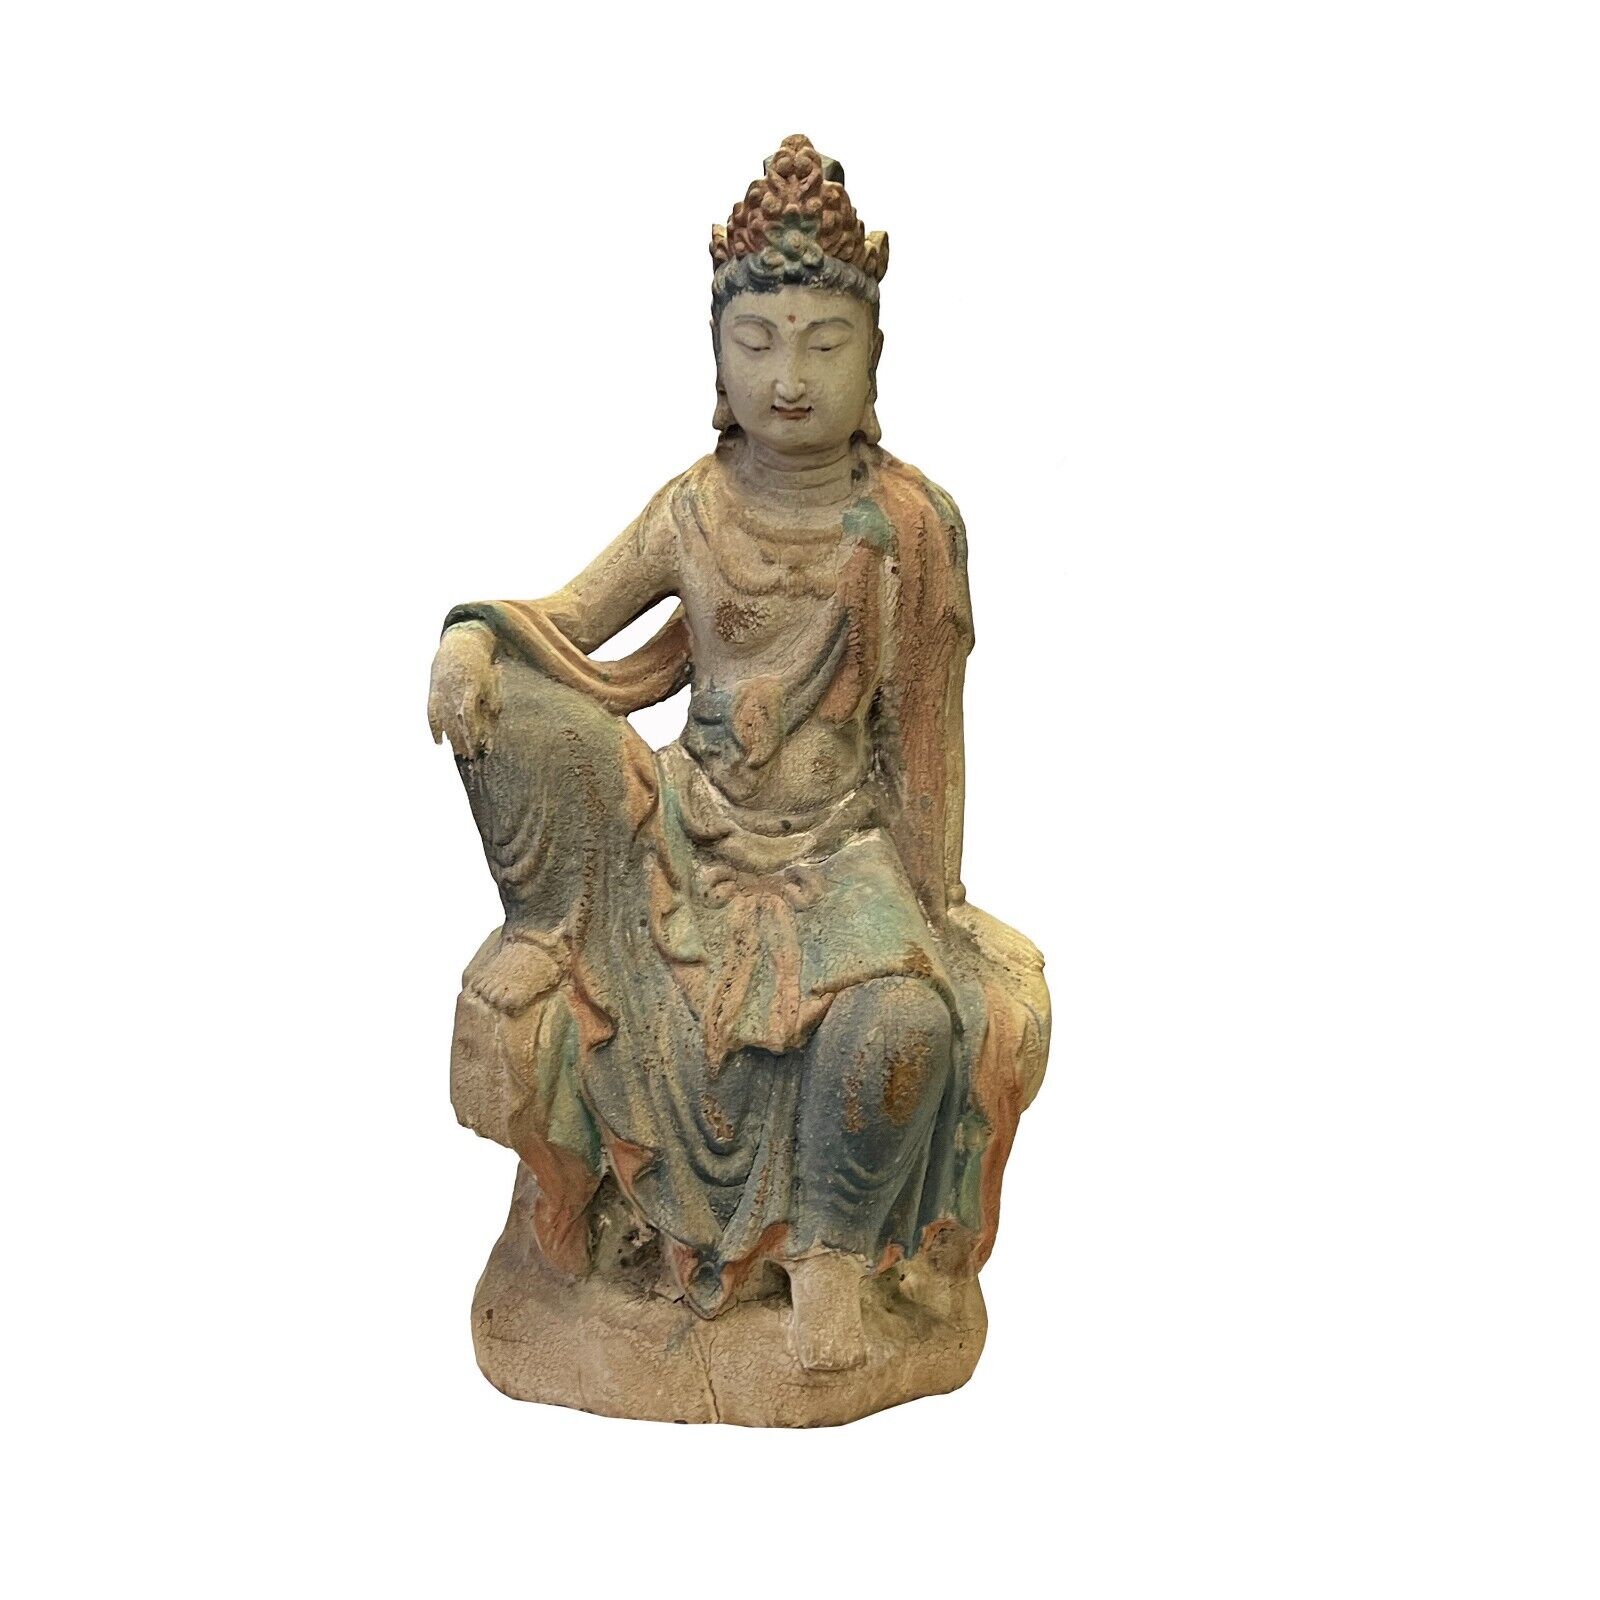 Rustic Wood Sitting Bodhisattva Kwan Yin Tara Buddha Statue ws2751